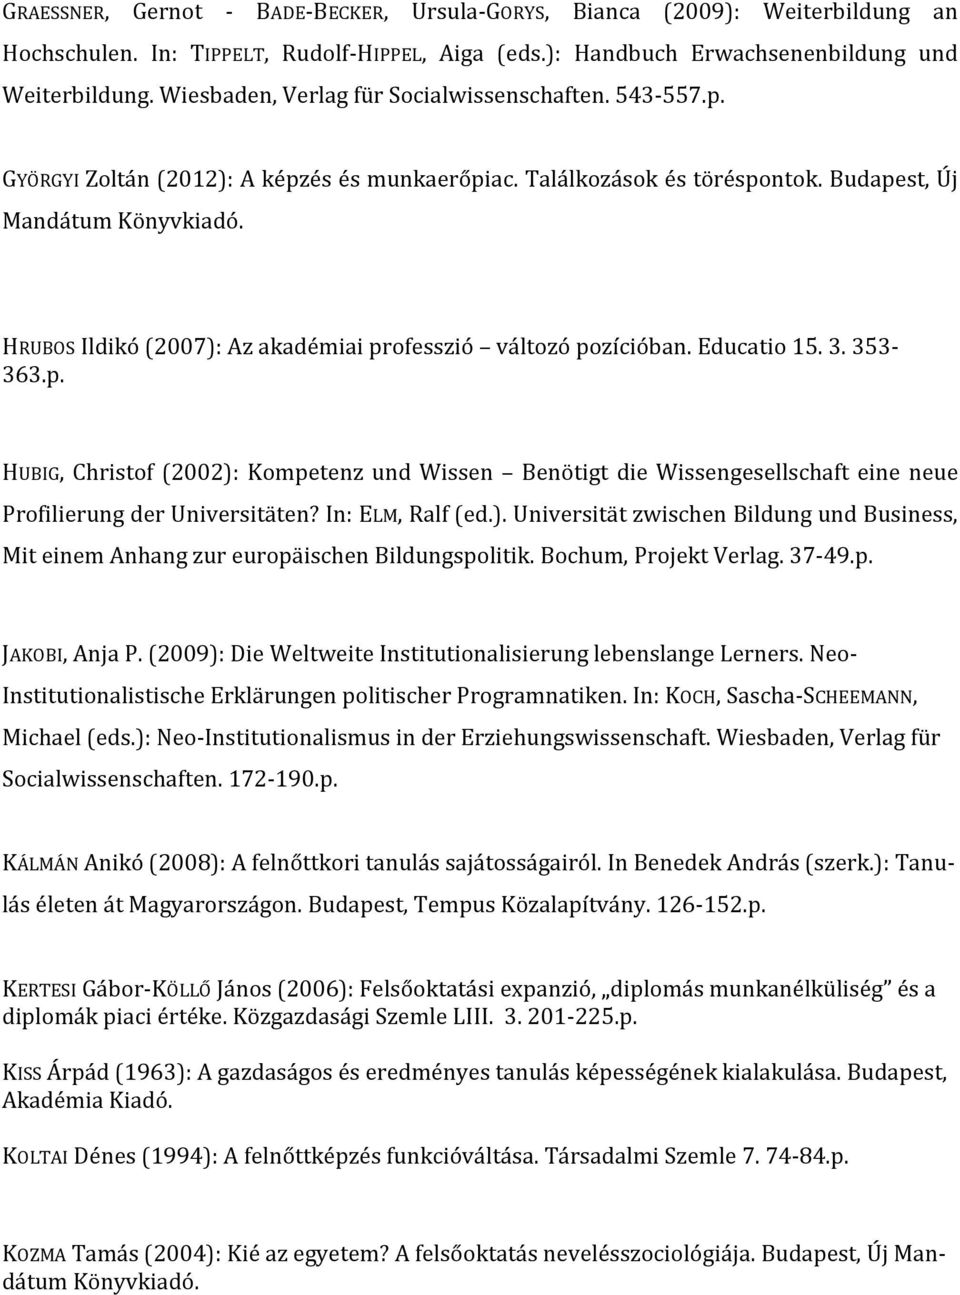 HRUBOS Ildikó (2007): Az akadémiai professzió változó pozícióban. Educatio 15. 3. 353-363.p. HUBIG, Christof (2002): Kompetenz und Wissen Benötigt die Wissengesellschaft eine neue Profilierung der Universitäten?